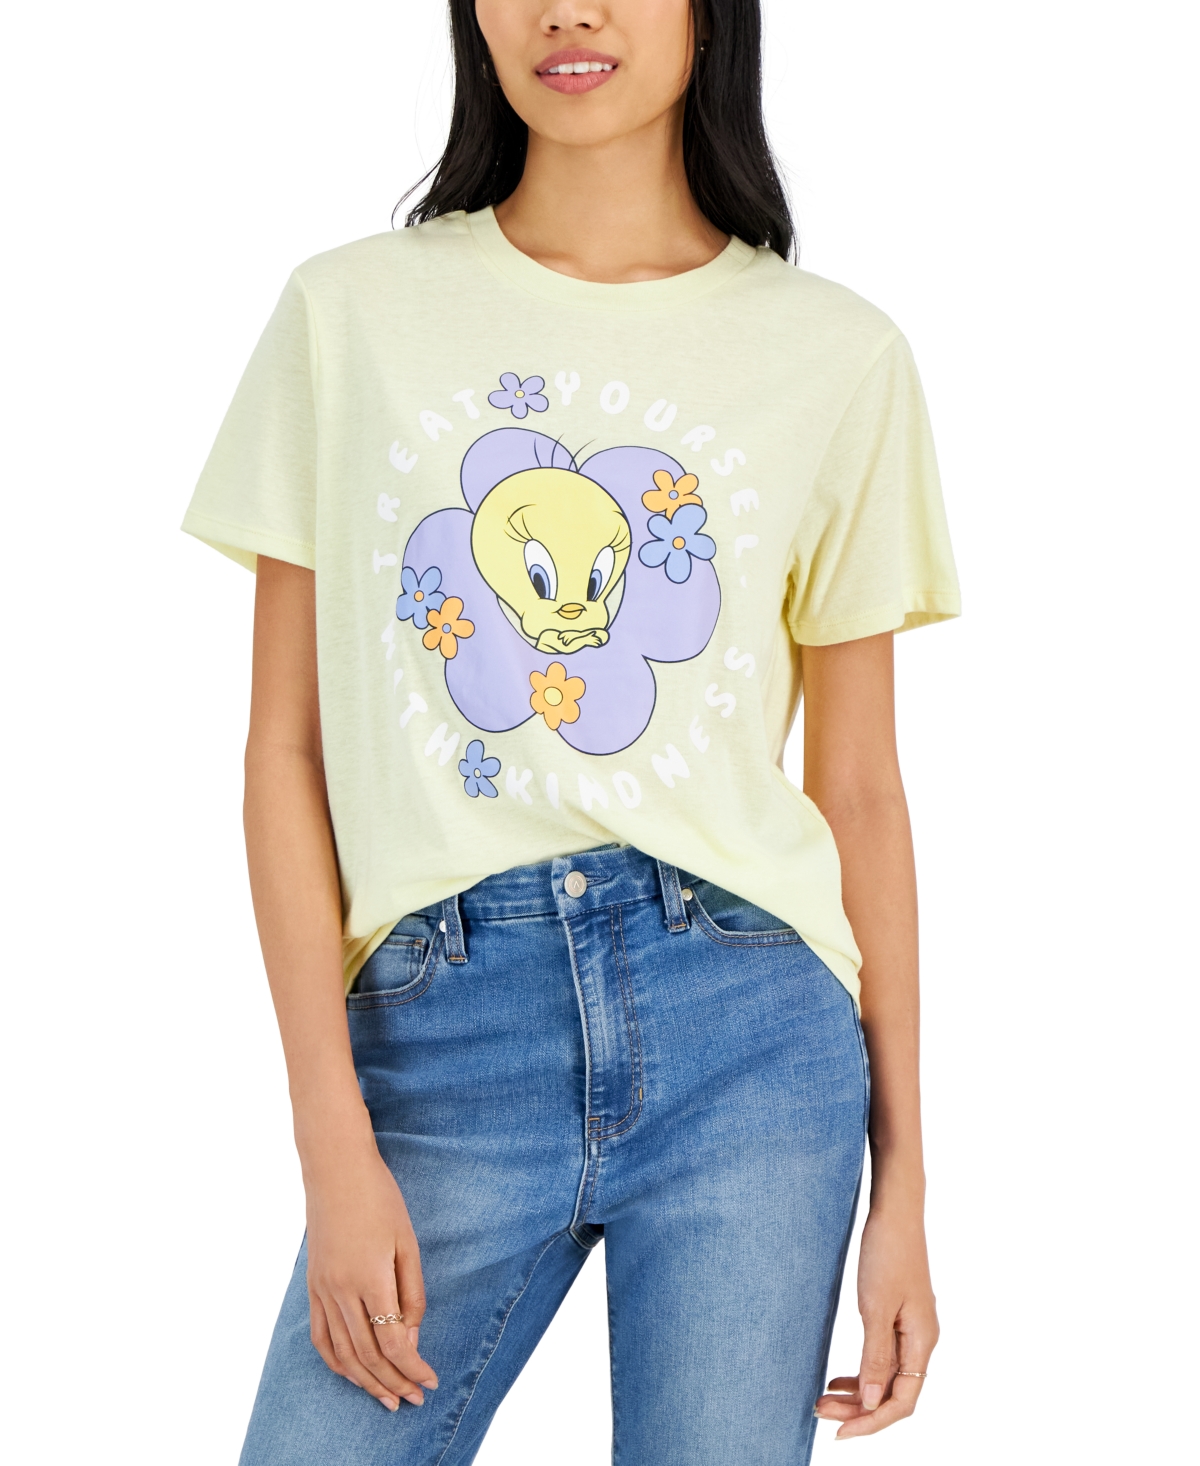 Juniors' Tweety Bird Treat Yourself Graphic Print T-Shirt - Anise Flower